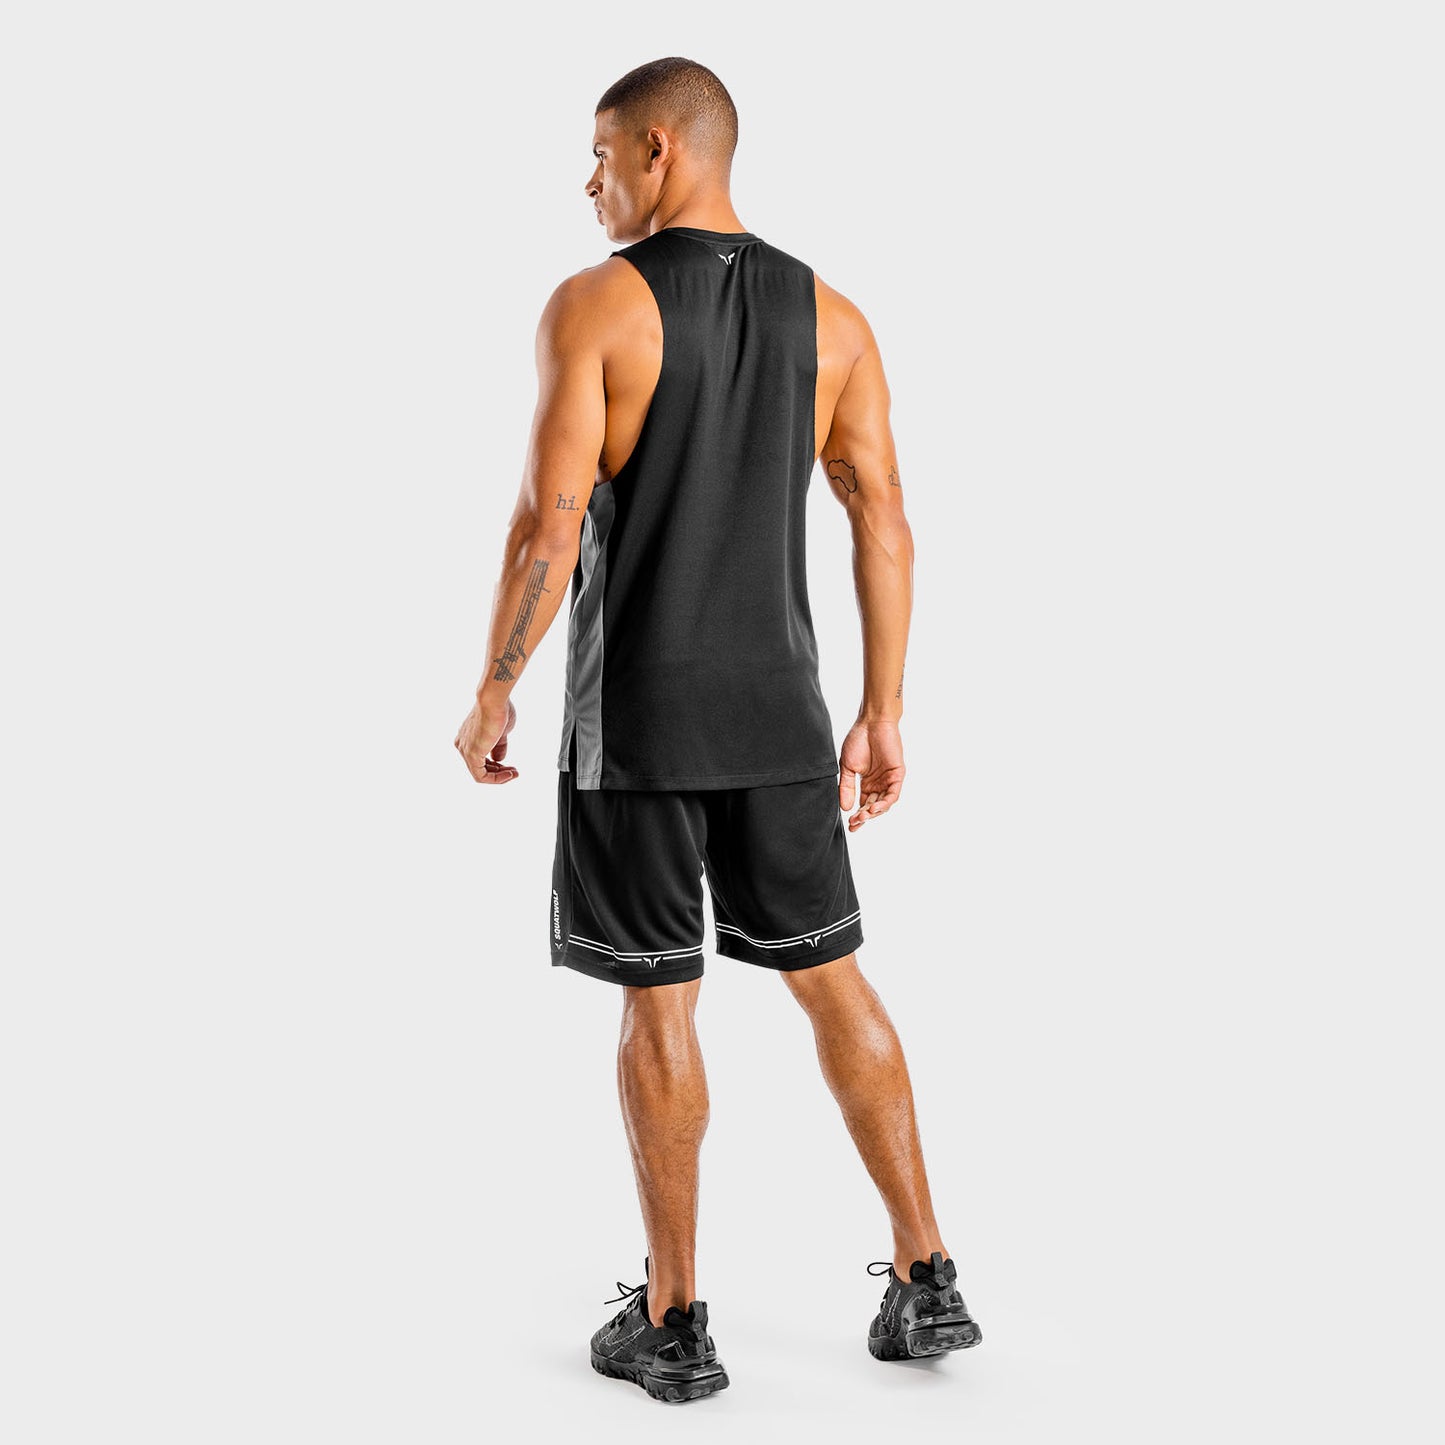 squatwolf-workout-tank-tops-for-men-flux-basketball-tank-black-gym-wear